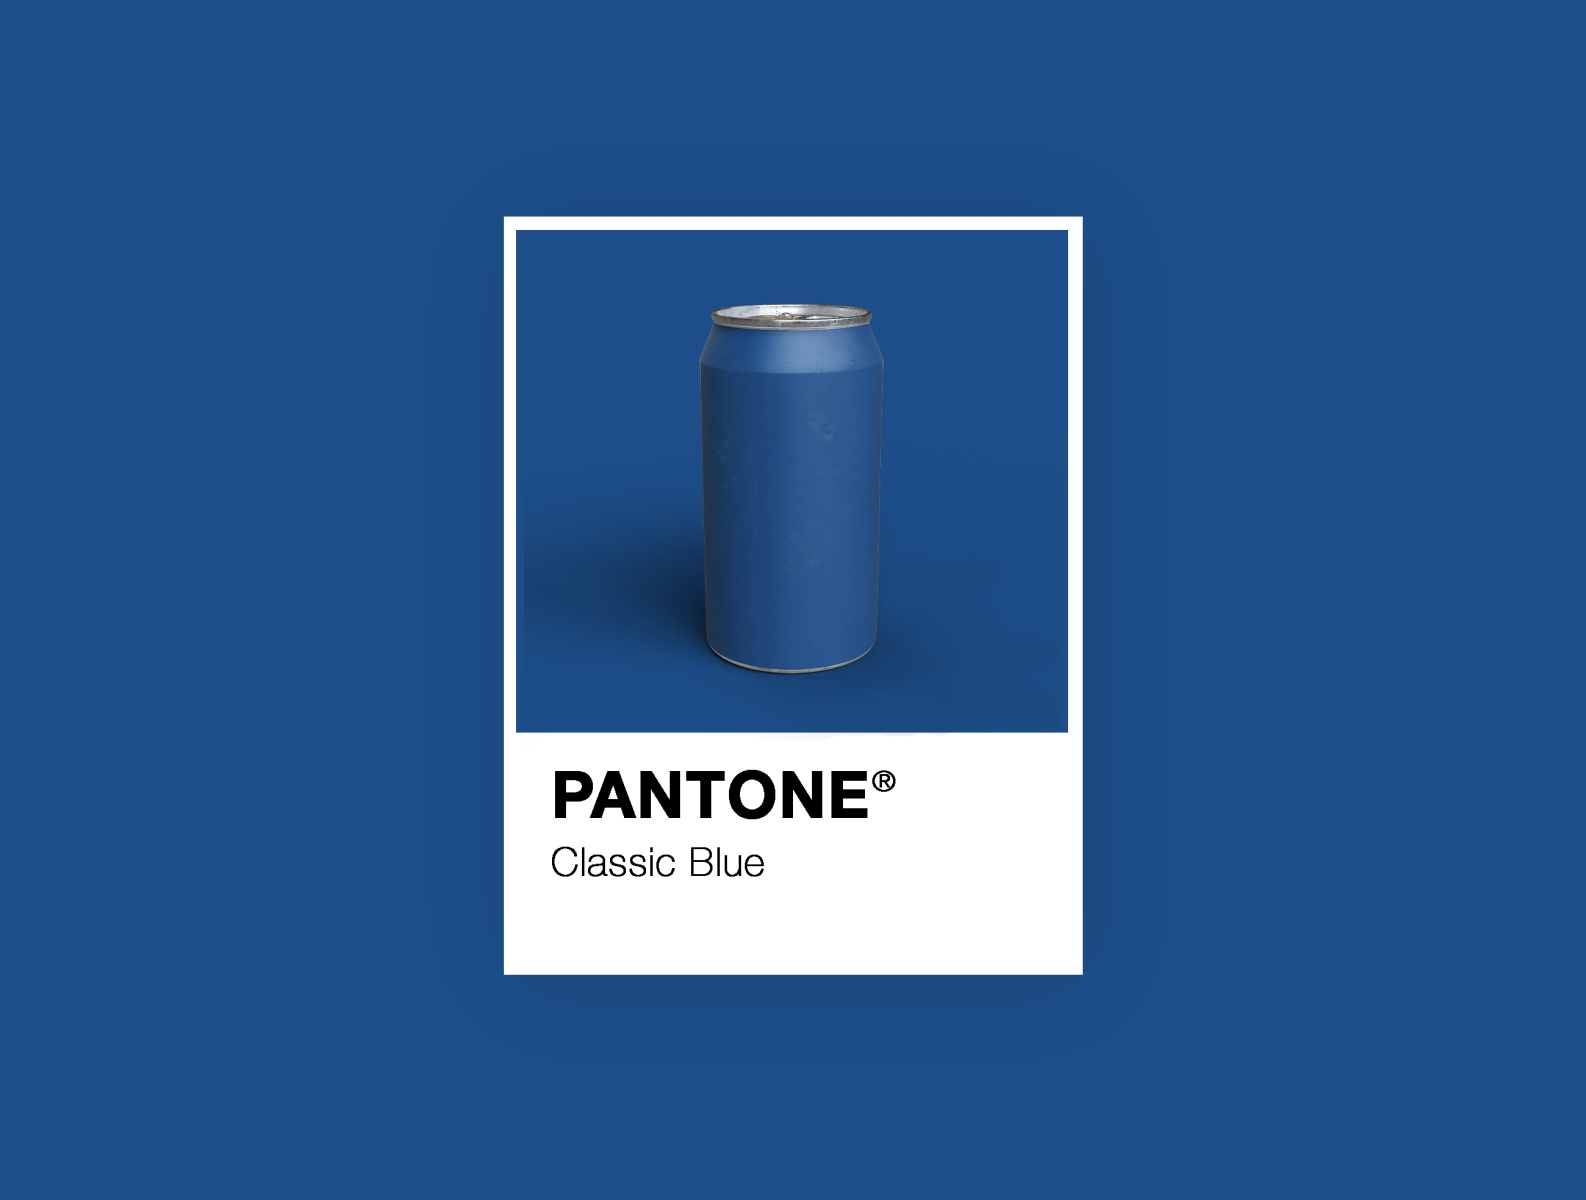 PANTONE 19-4052 Classic Blue by Yamon Thi Han Hninn on ...